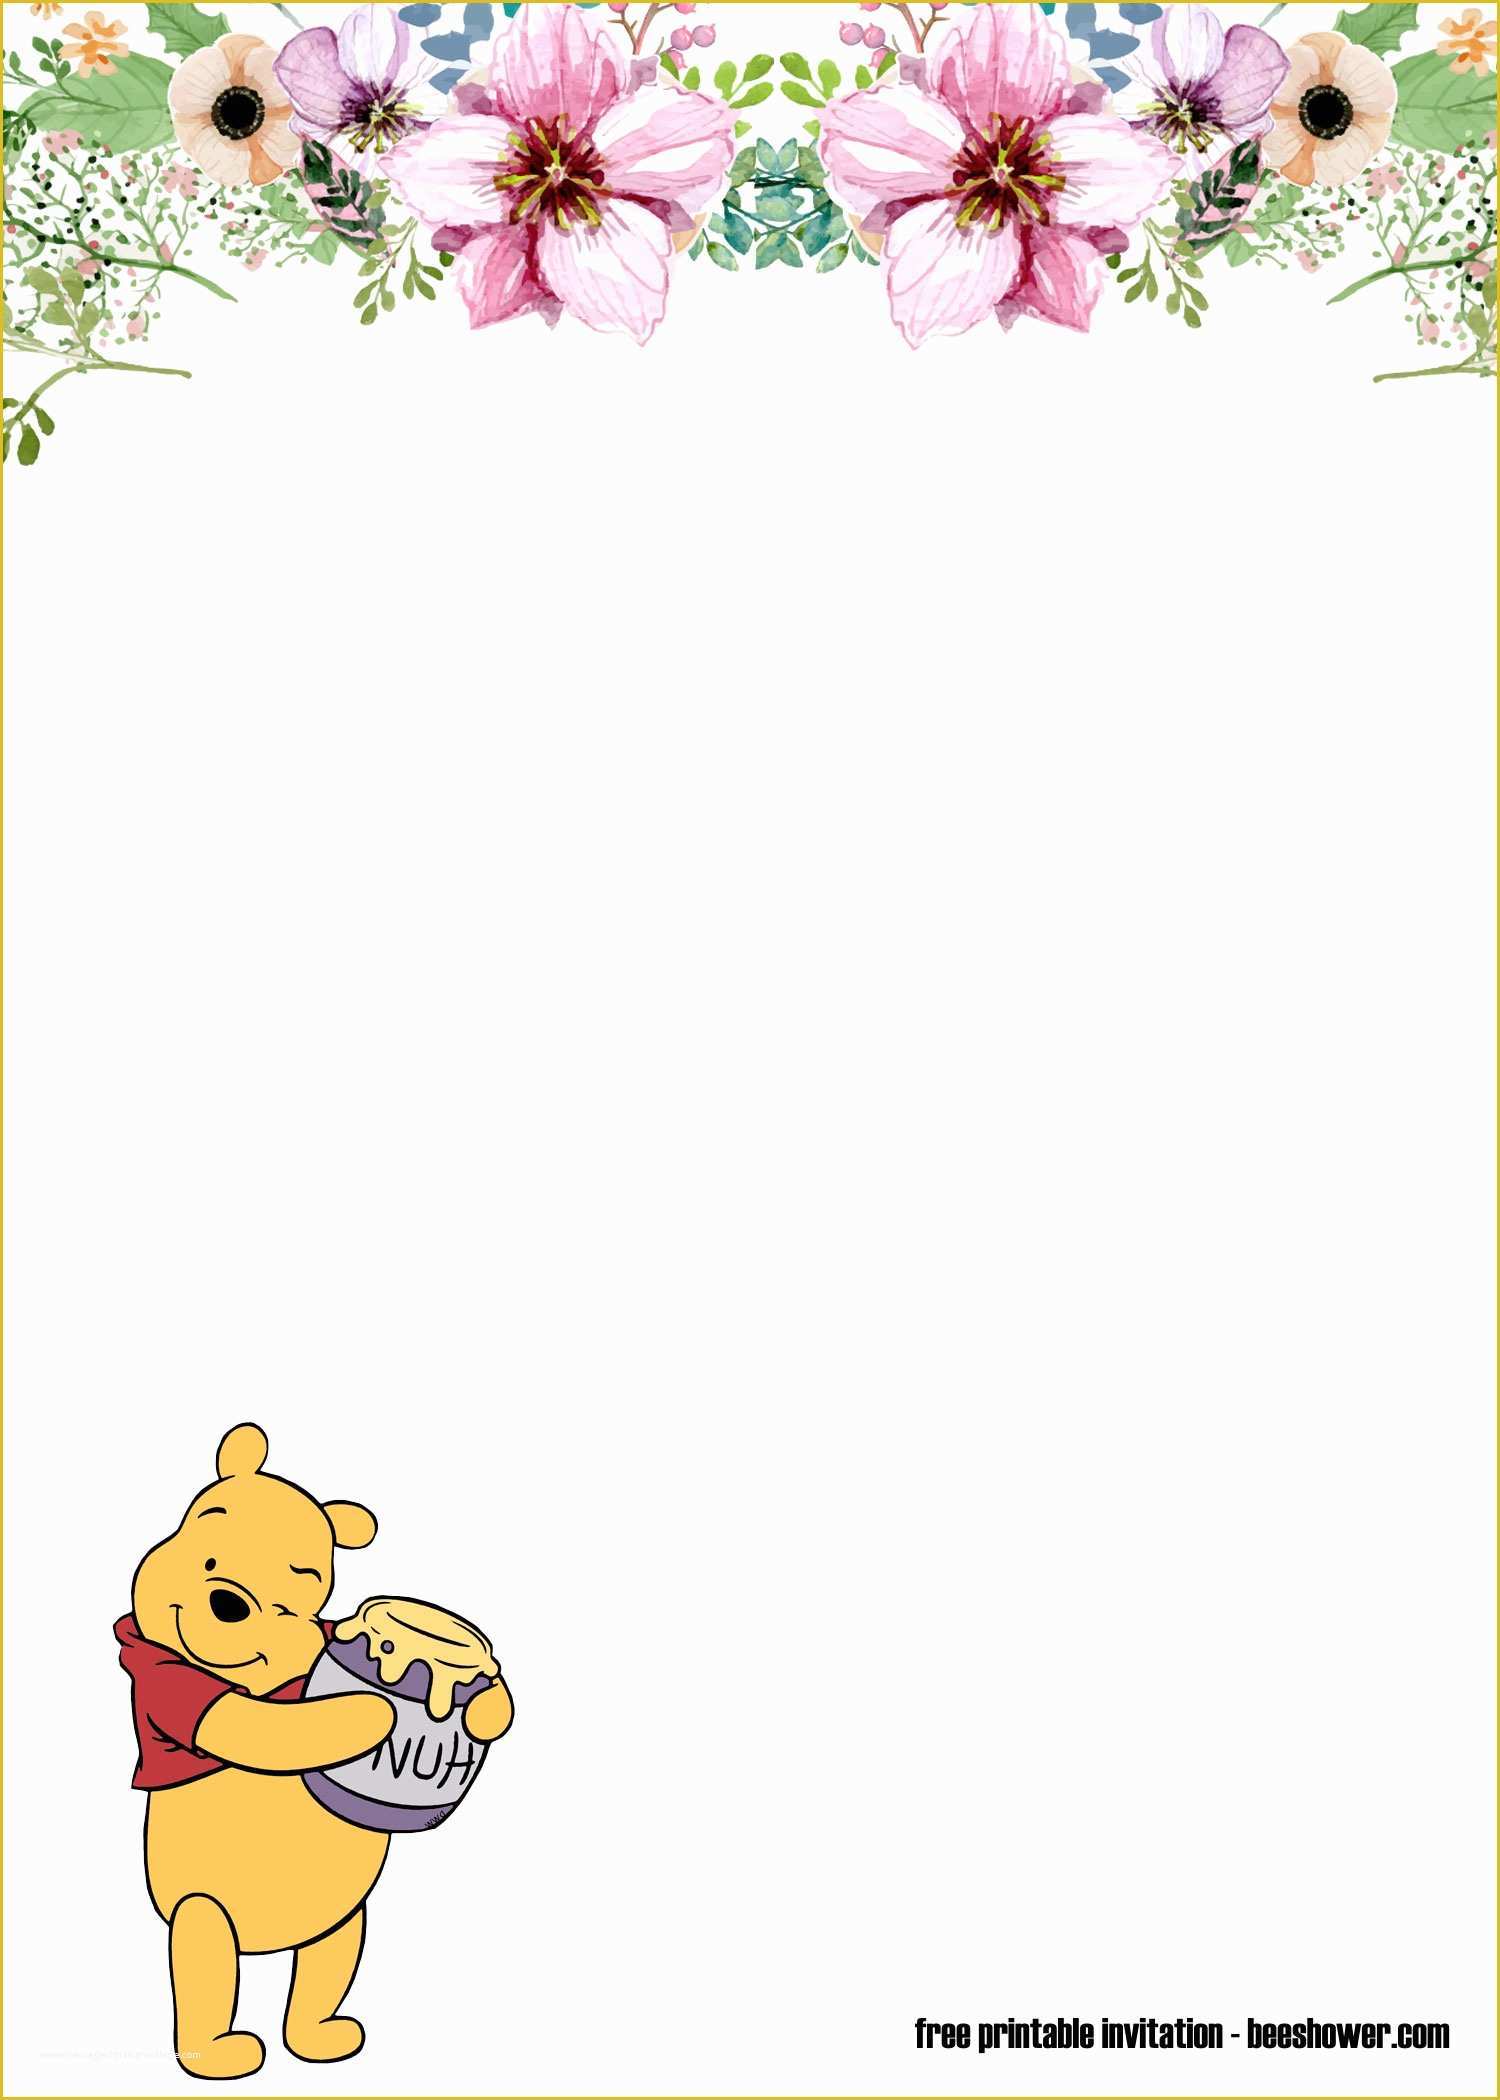 Winnie the Pooh Baby Shower Invitations Templates Free Of Free Classic Winnie the Pooh Baby Shower Invitations